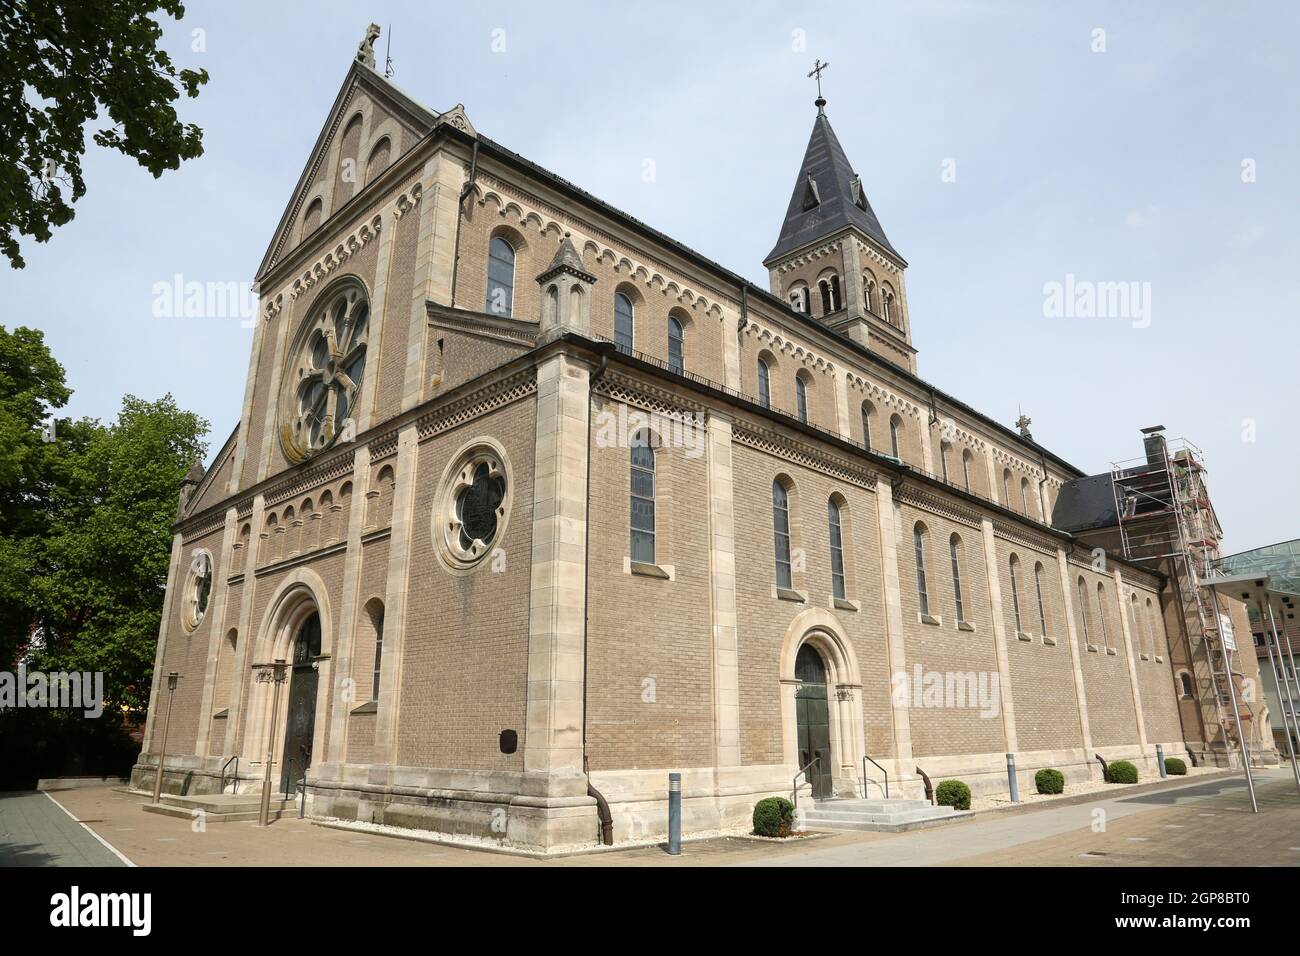 Saint Stephen parish church in Wasseralfingen, Germany Stock Photo